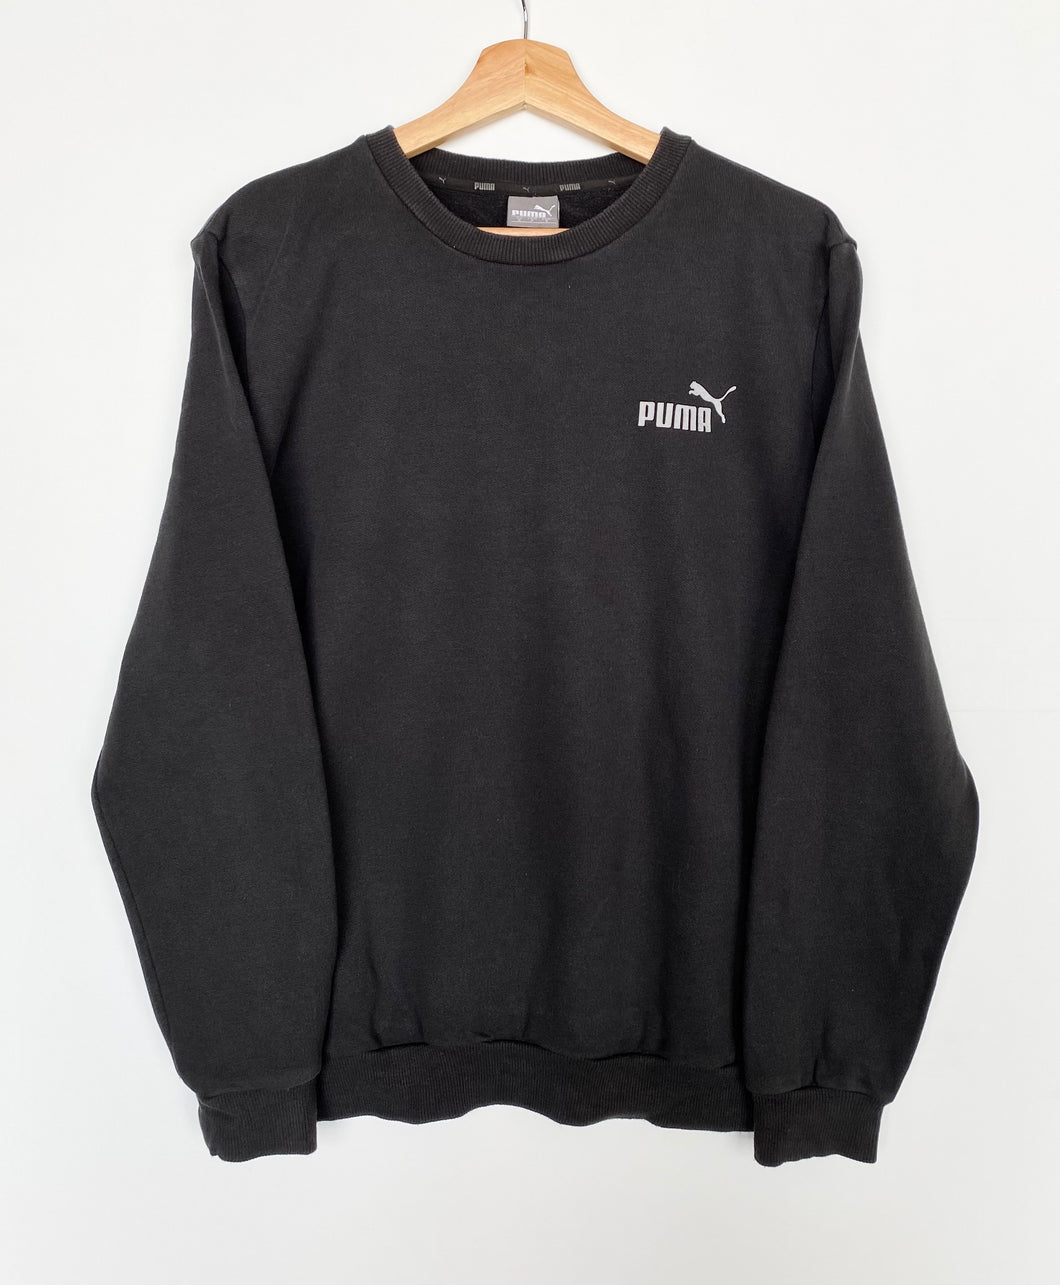 Puma sweatshirt (S)